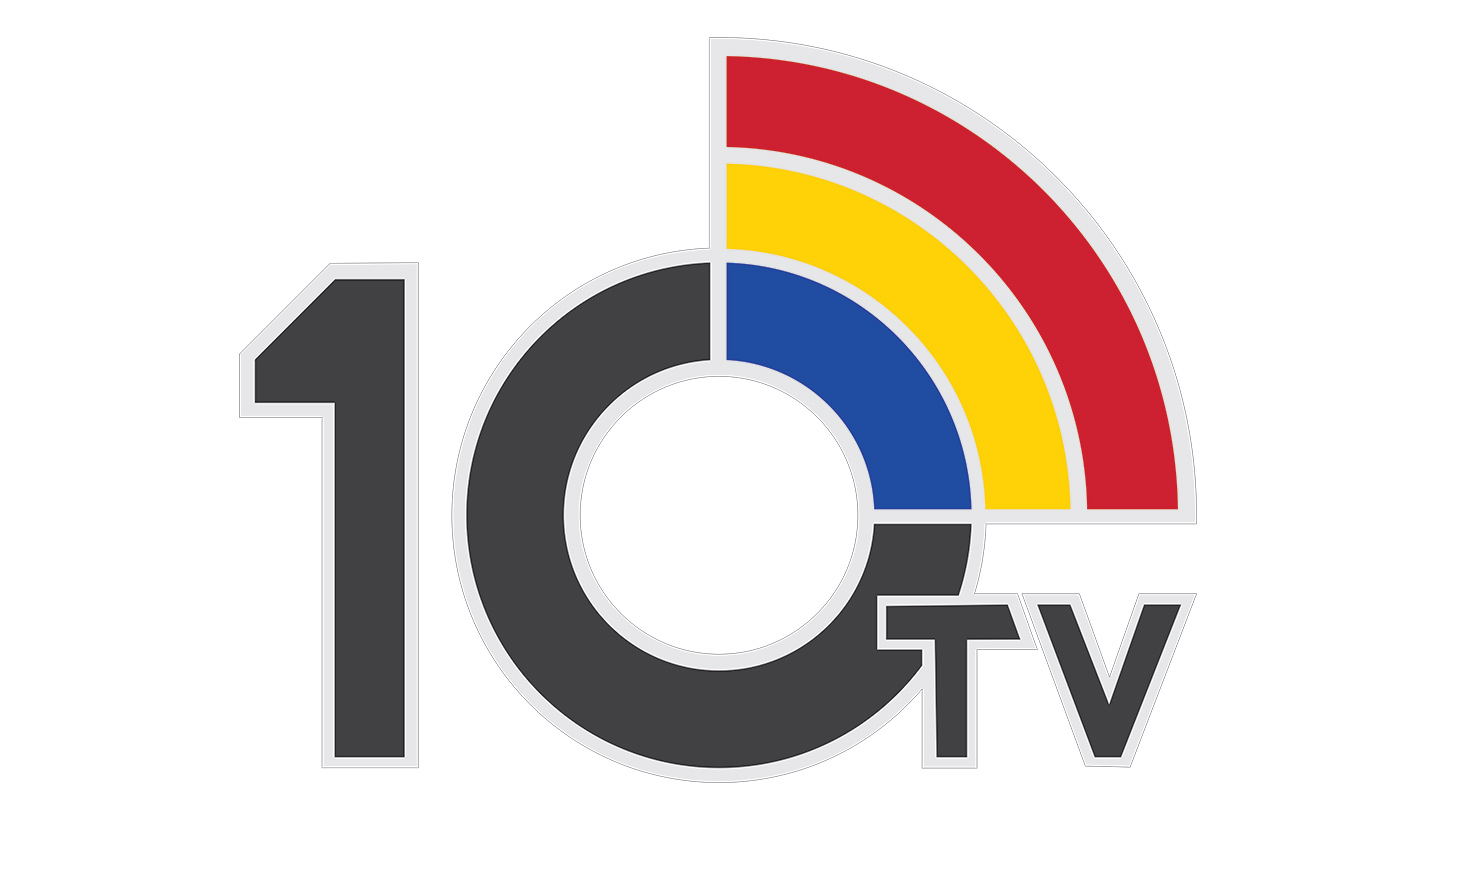 Profile 10 TV Tv Channels